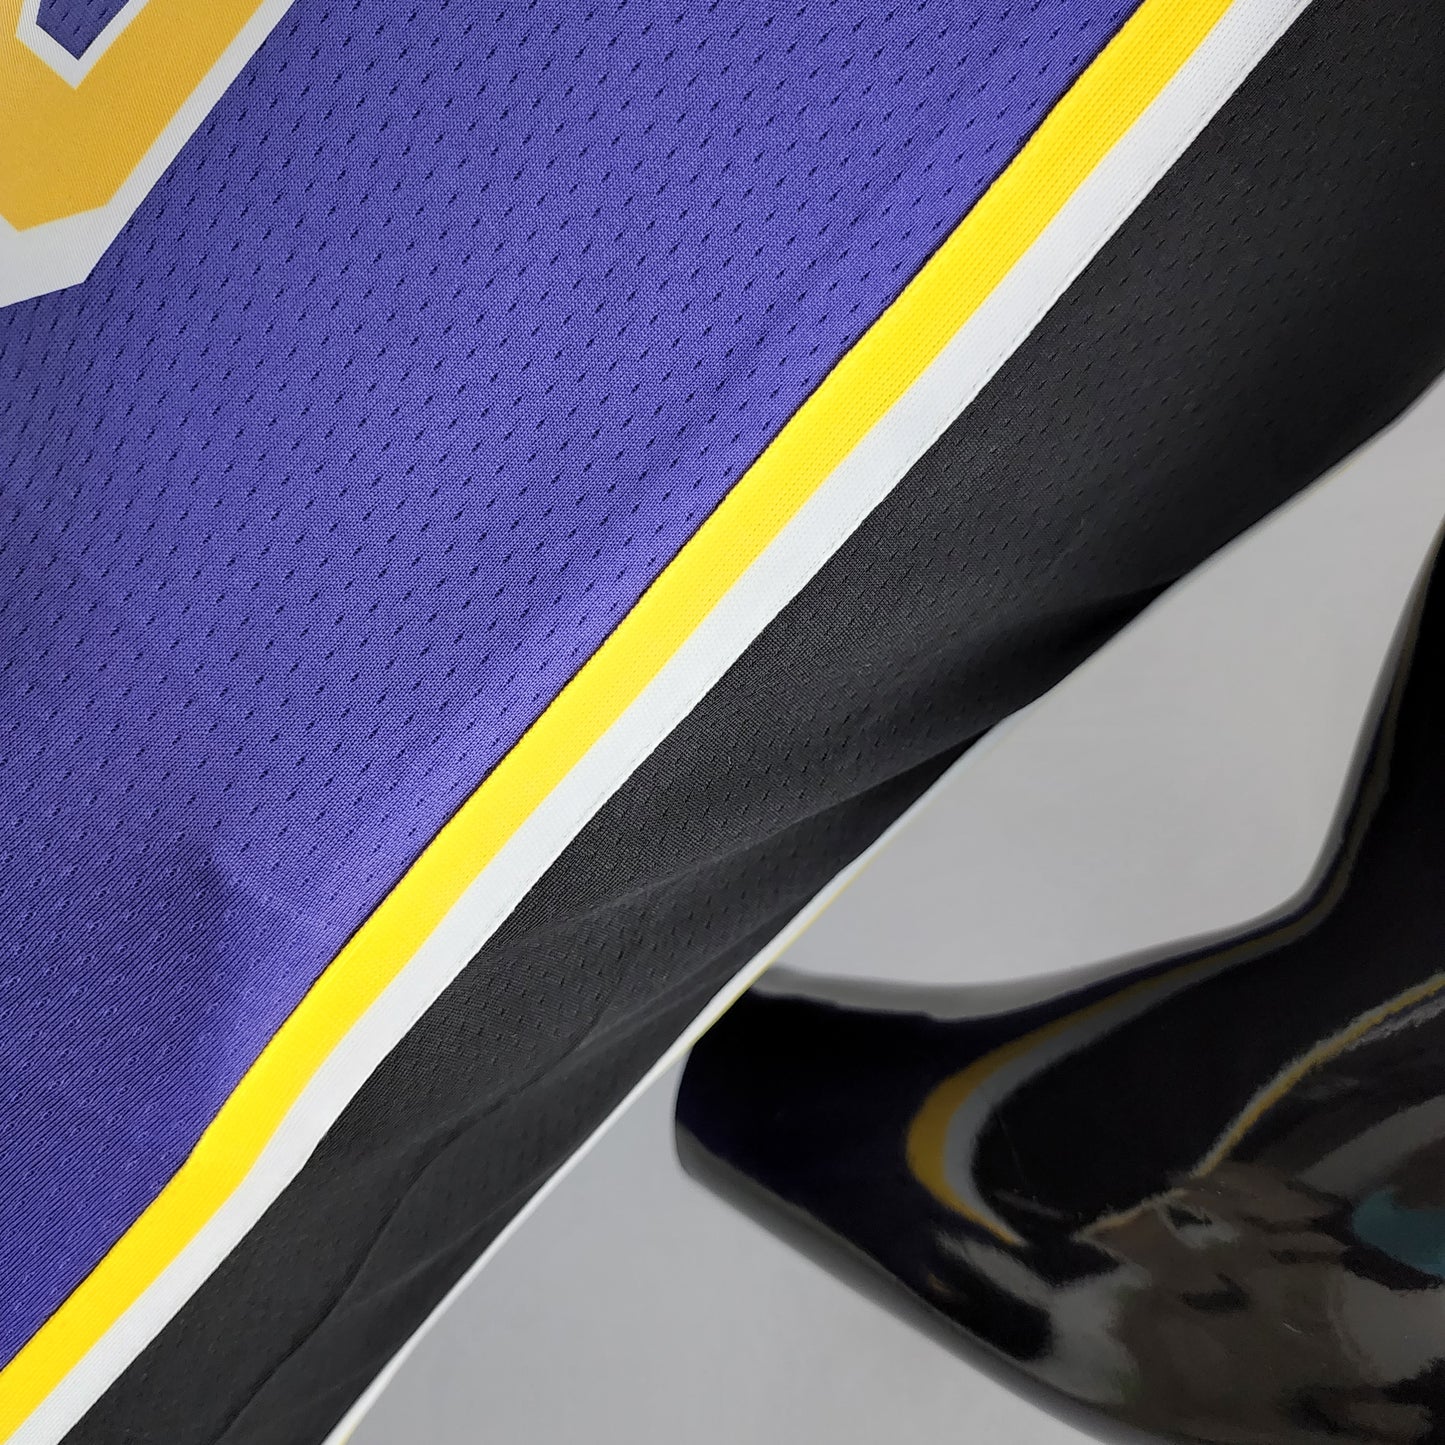 NBA 75th Anniversary Lakers TOSCANO-95 Azul